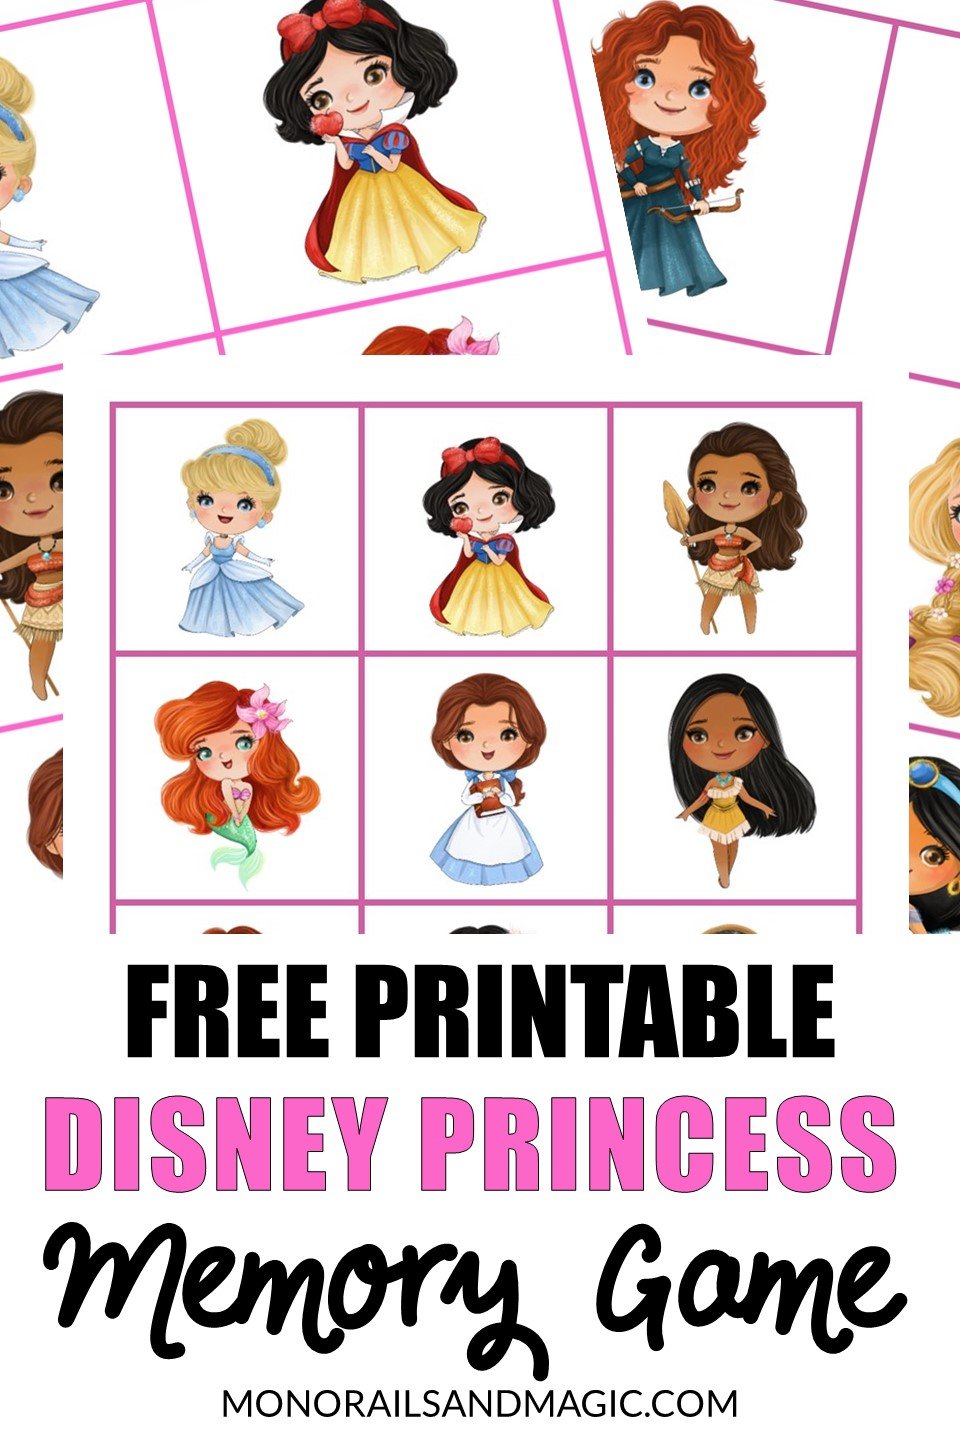 Free printable Disney princess memory game for kids.